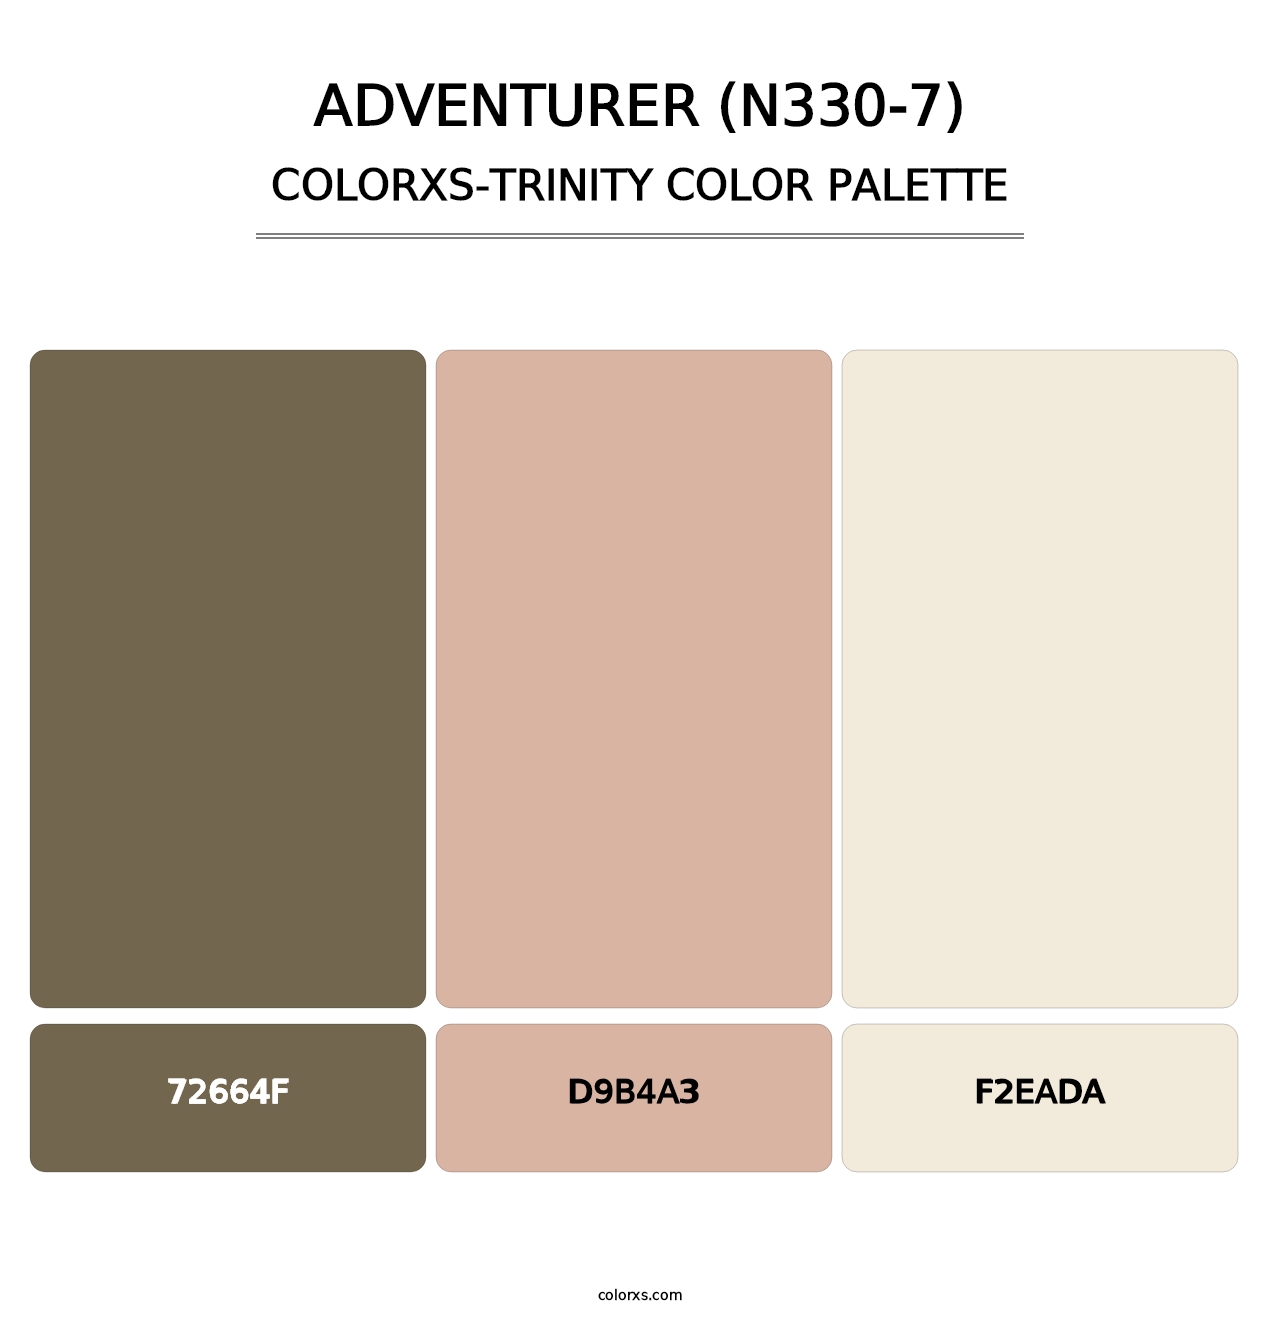 Adventurer (N330-7) - Colorxs Trinity Palette